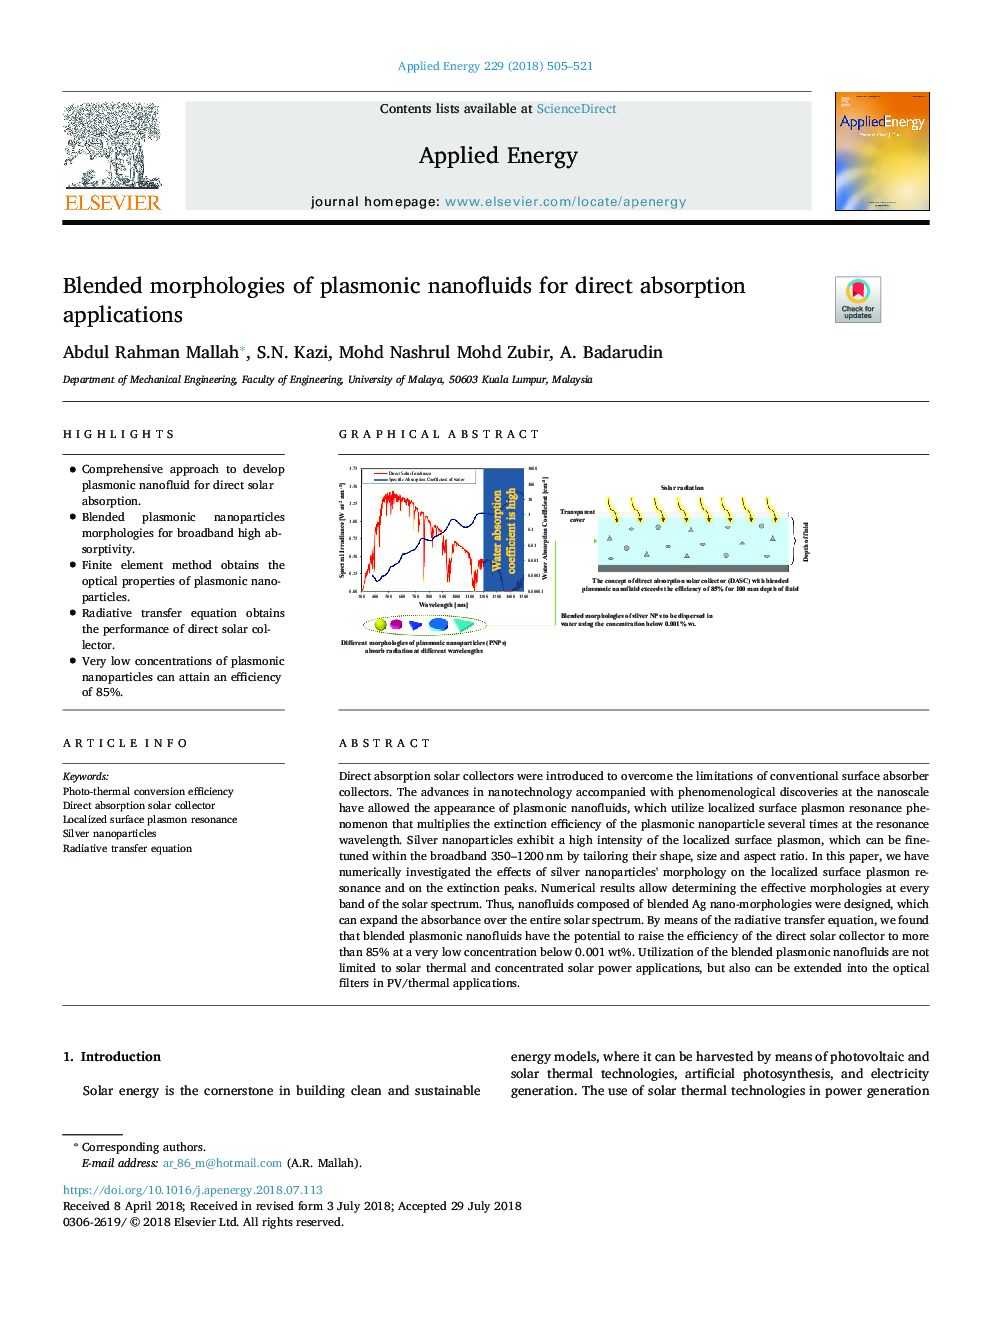 Blended morphologies of plasmonic nanofluids for direct absorption applications